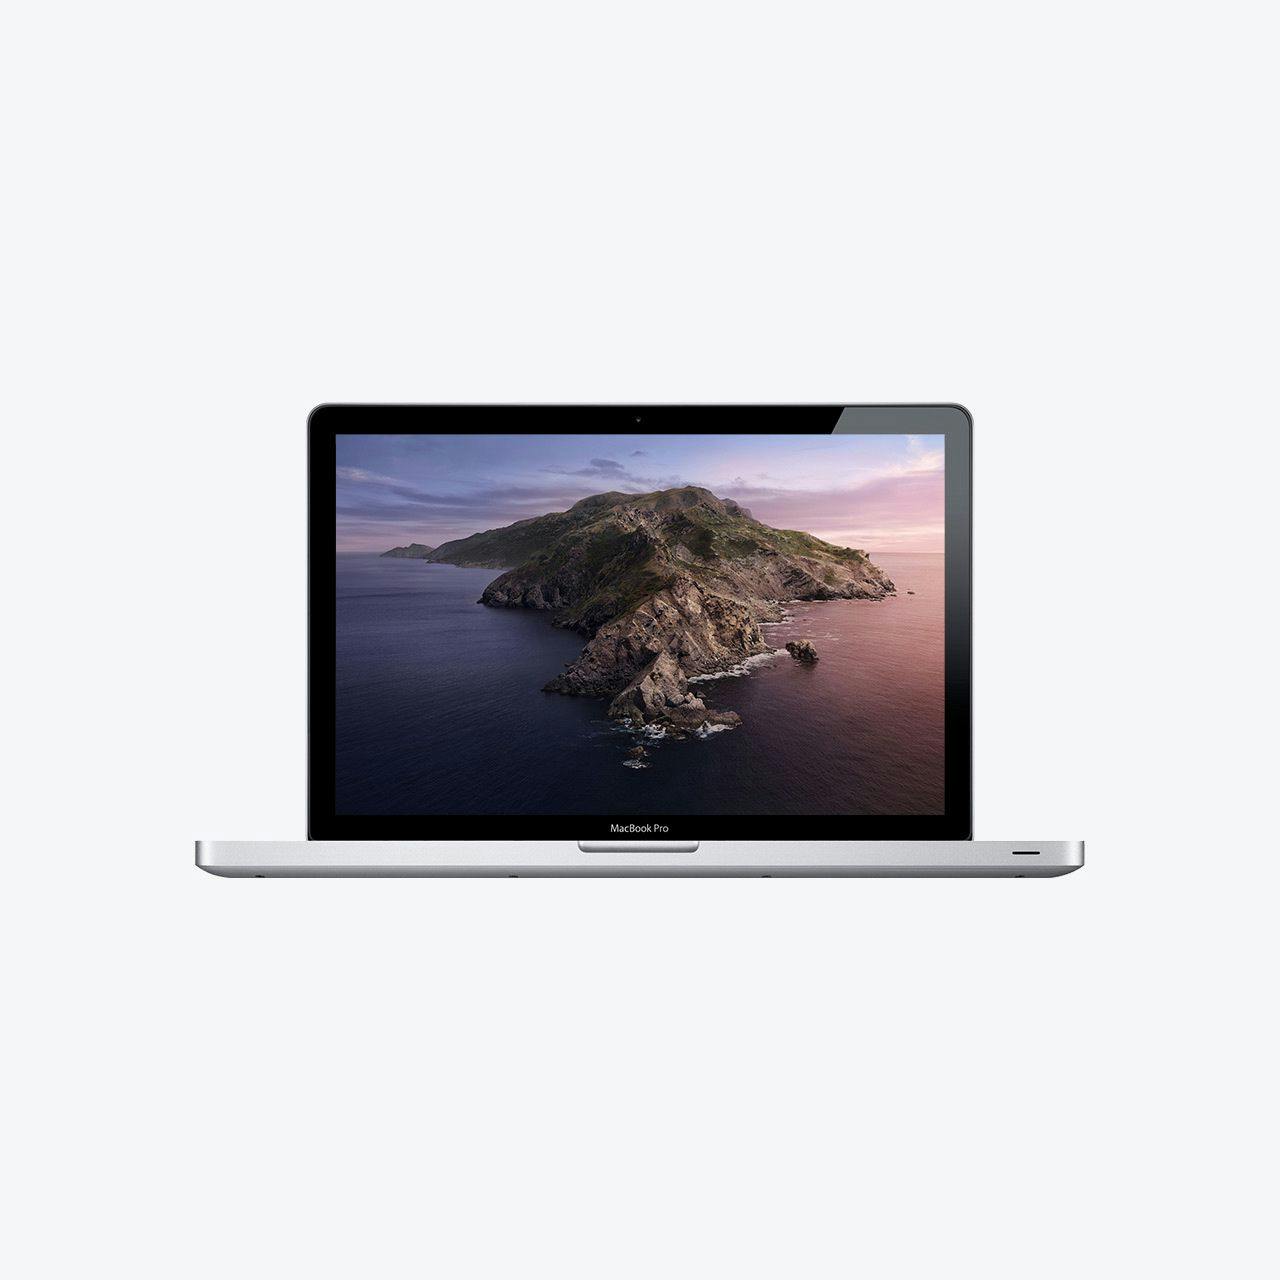 Image of a MacBook Pro (13-inch, Unibody, 09-12).